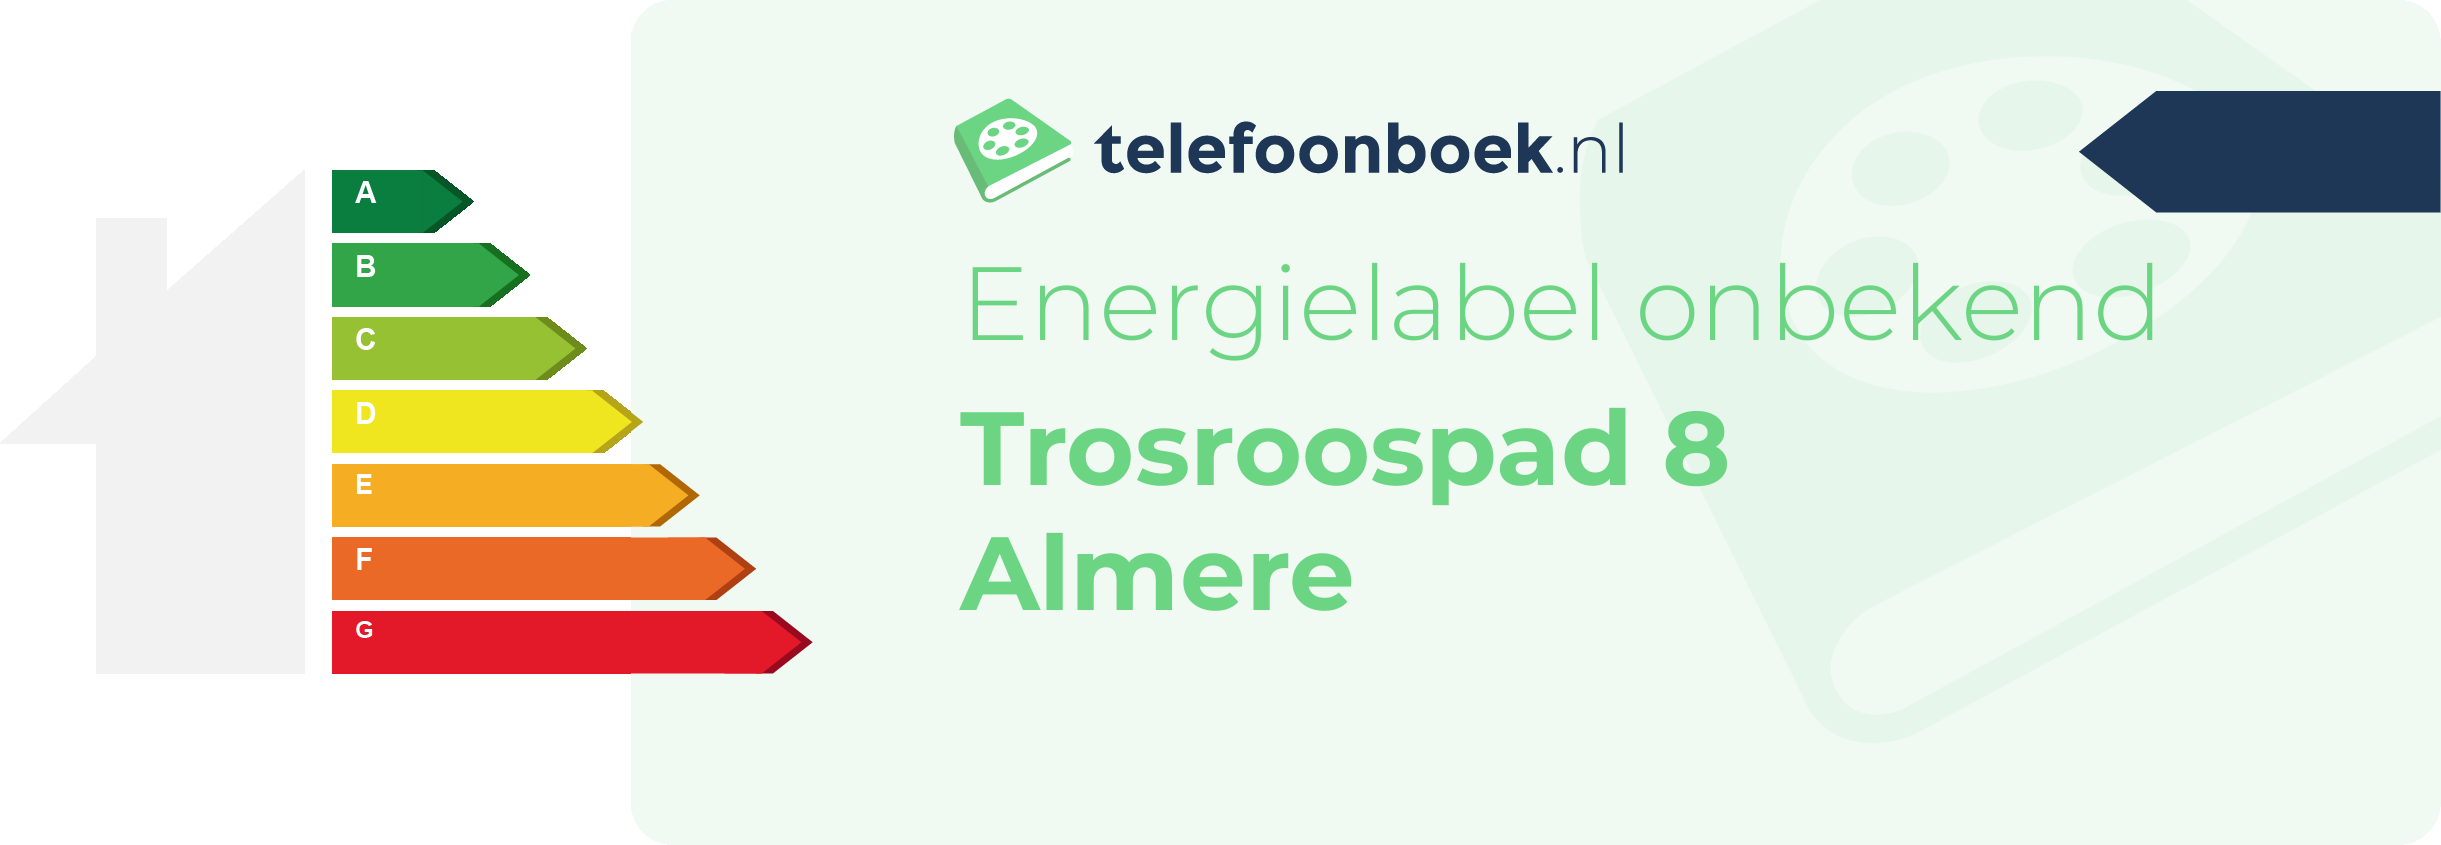 Energielabel Trosroospad 8 Almere